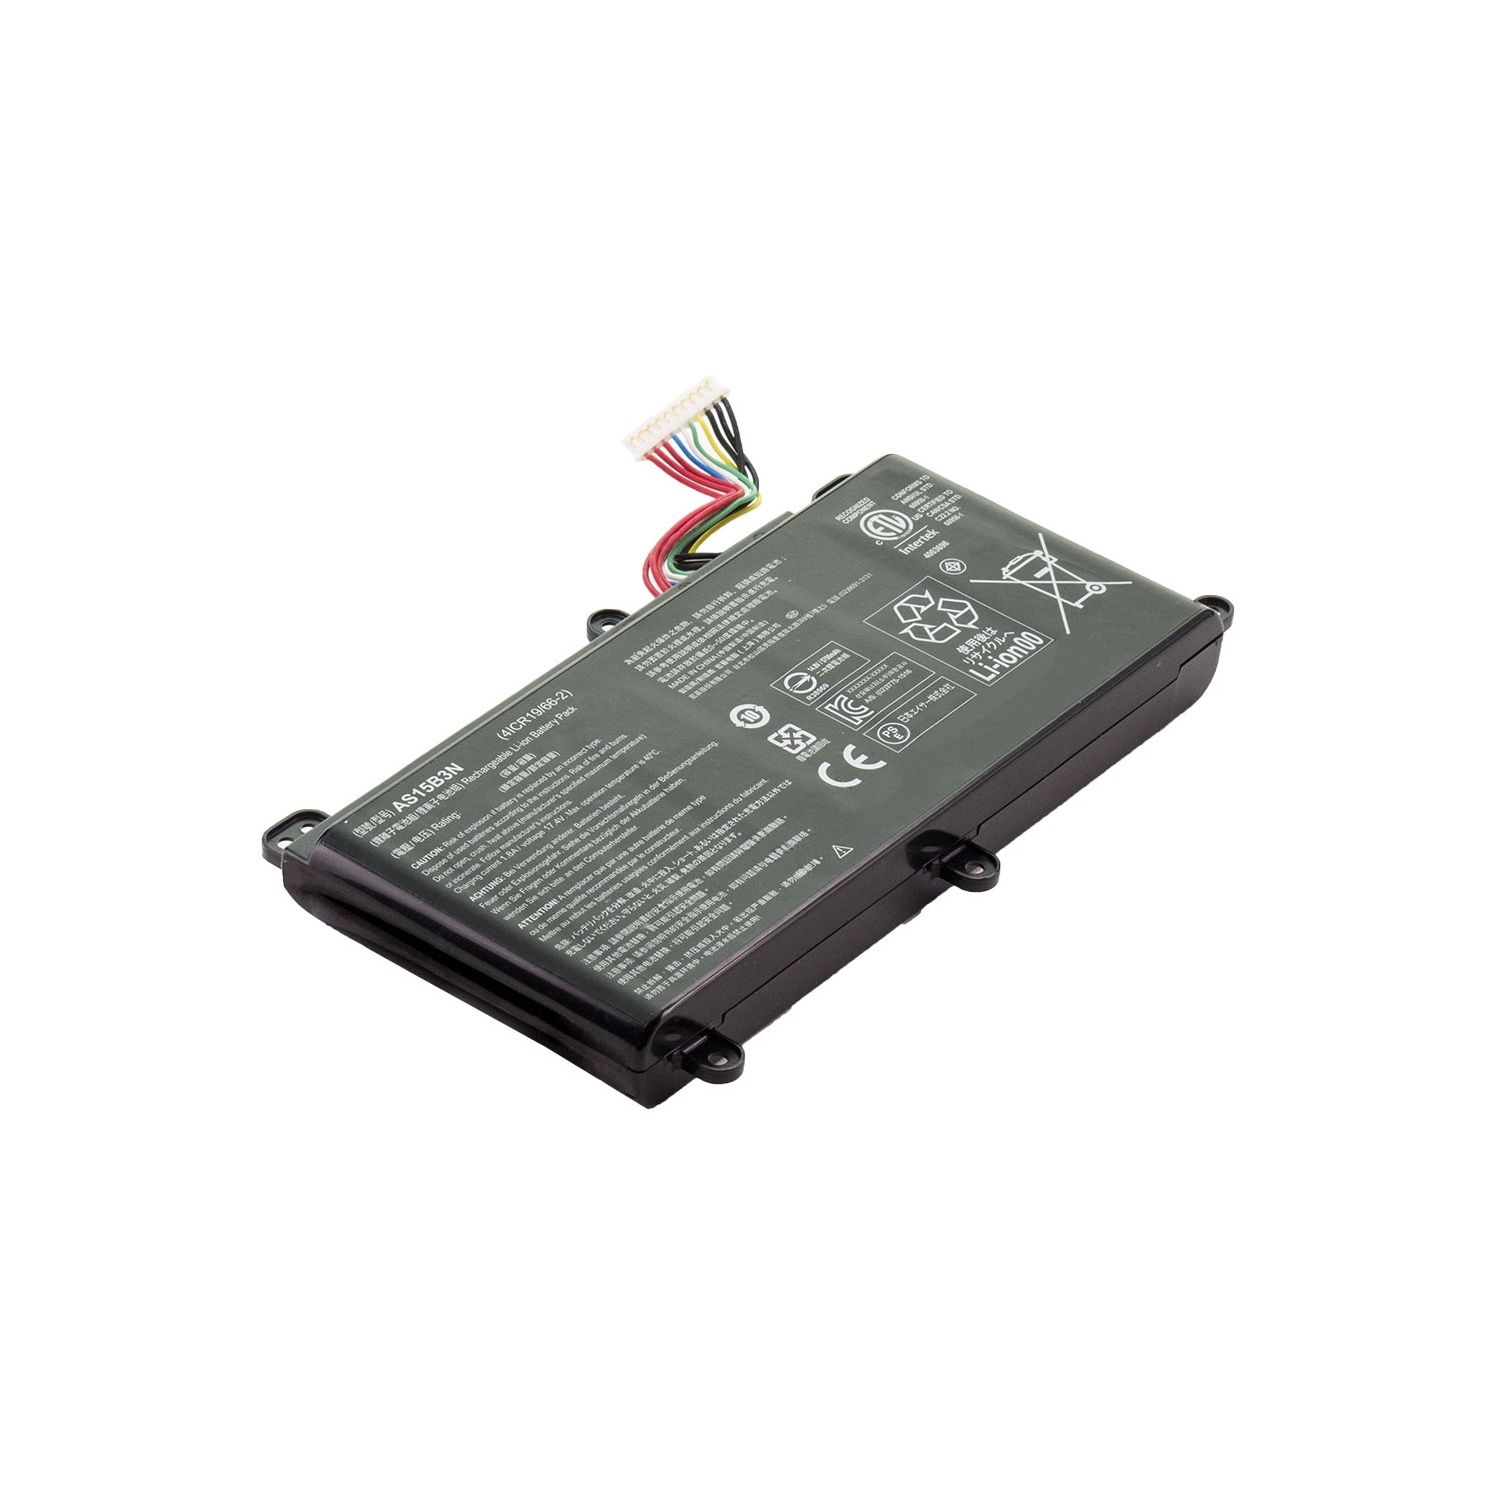 BATTDEPOT NEW Laptop Battery for Acer Predator 15 G9-592-51BB AS15B3N KT.00803.004 KT.00803.005